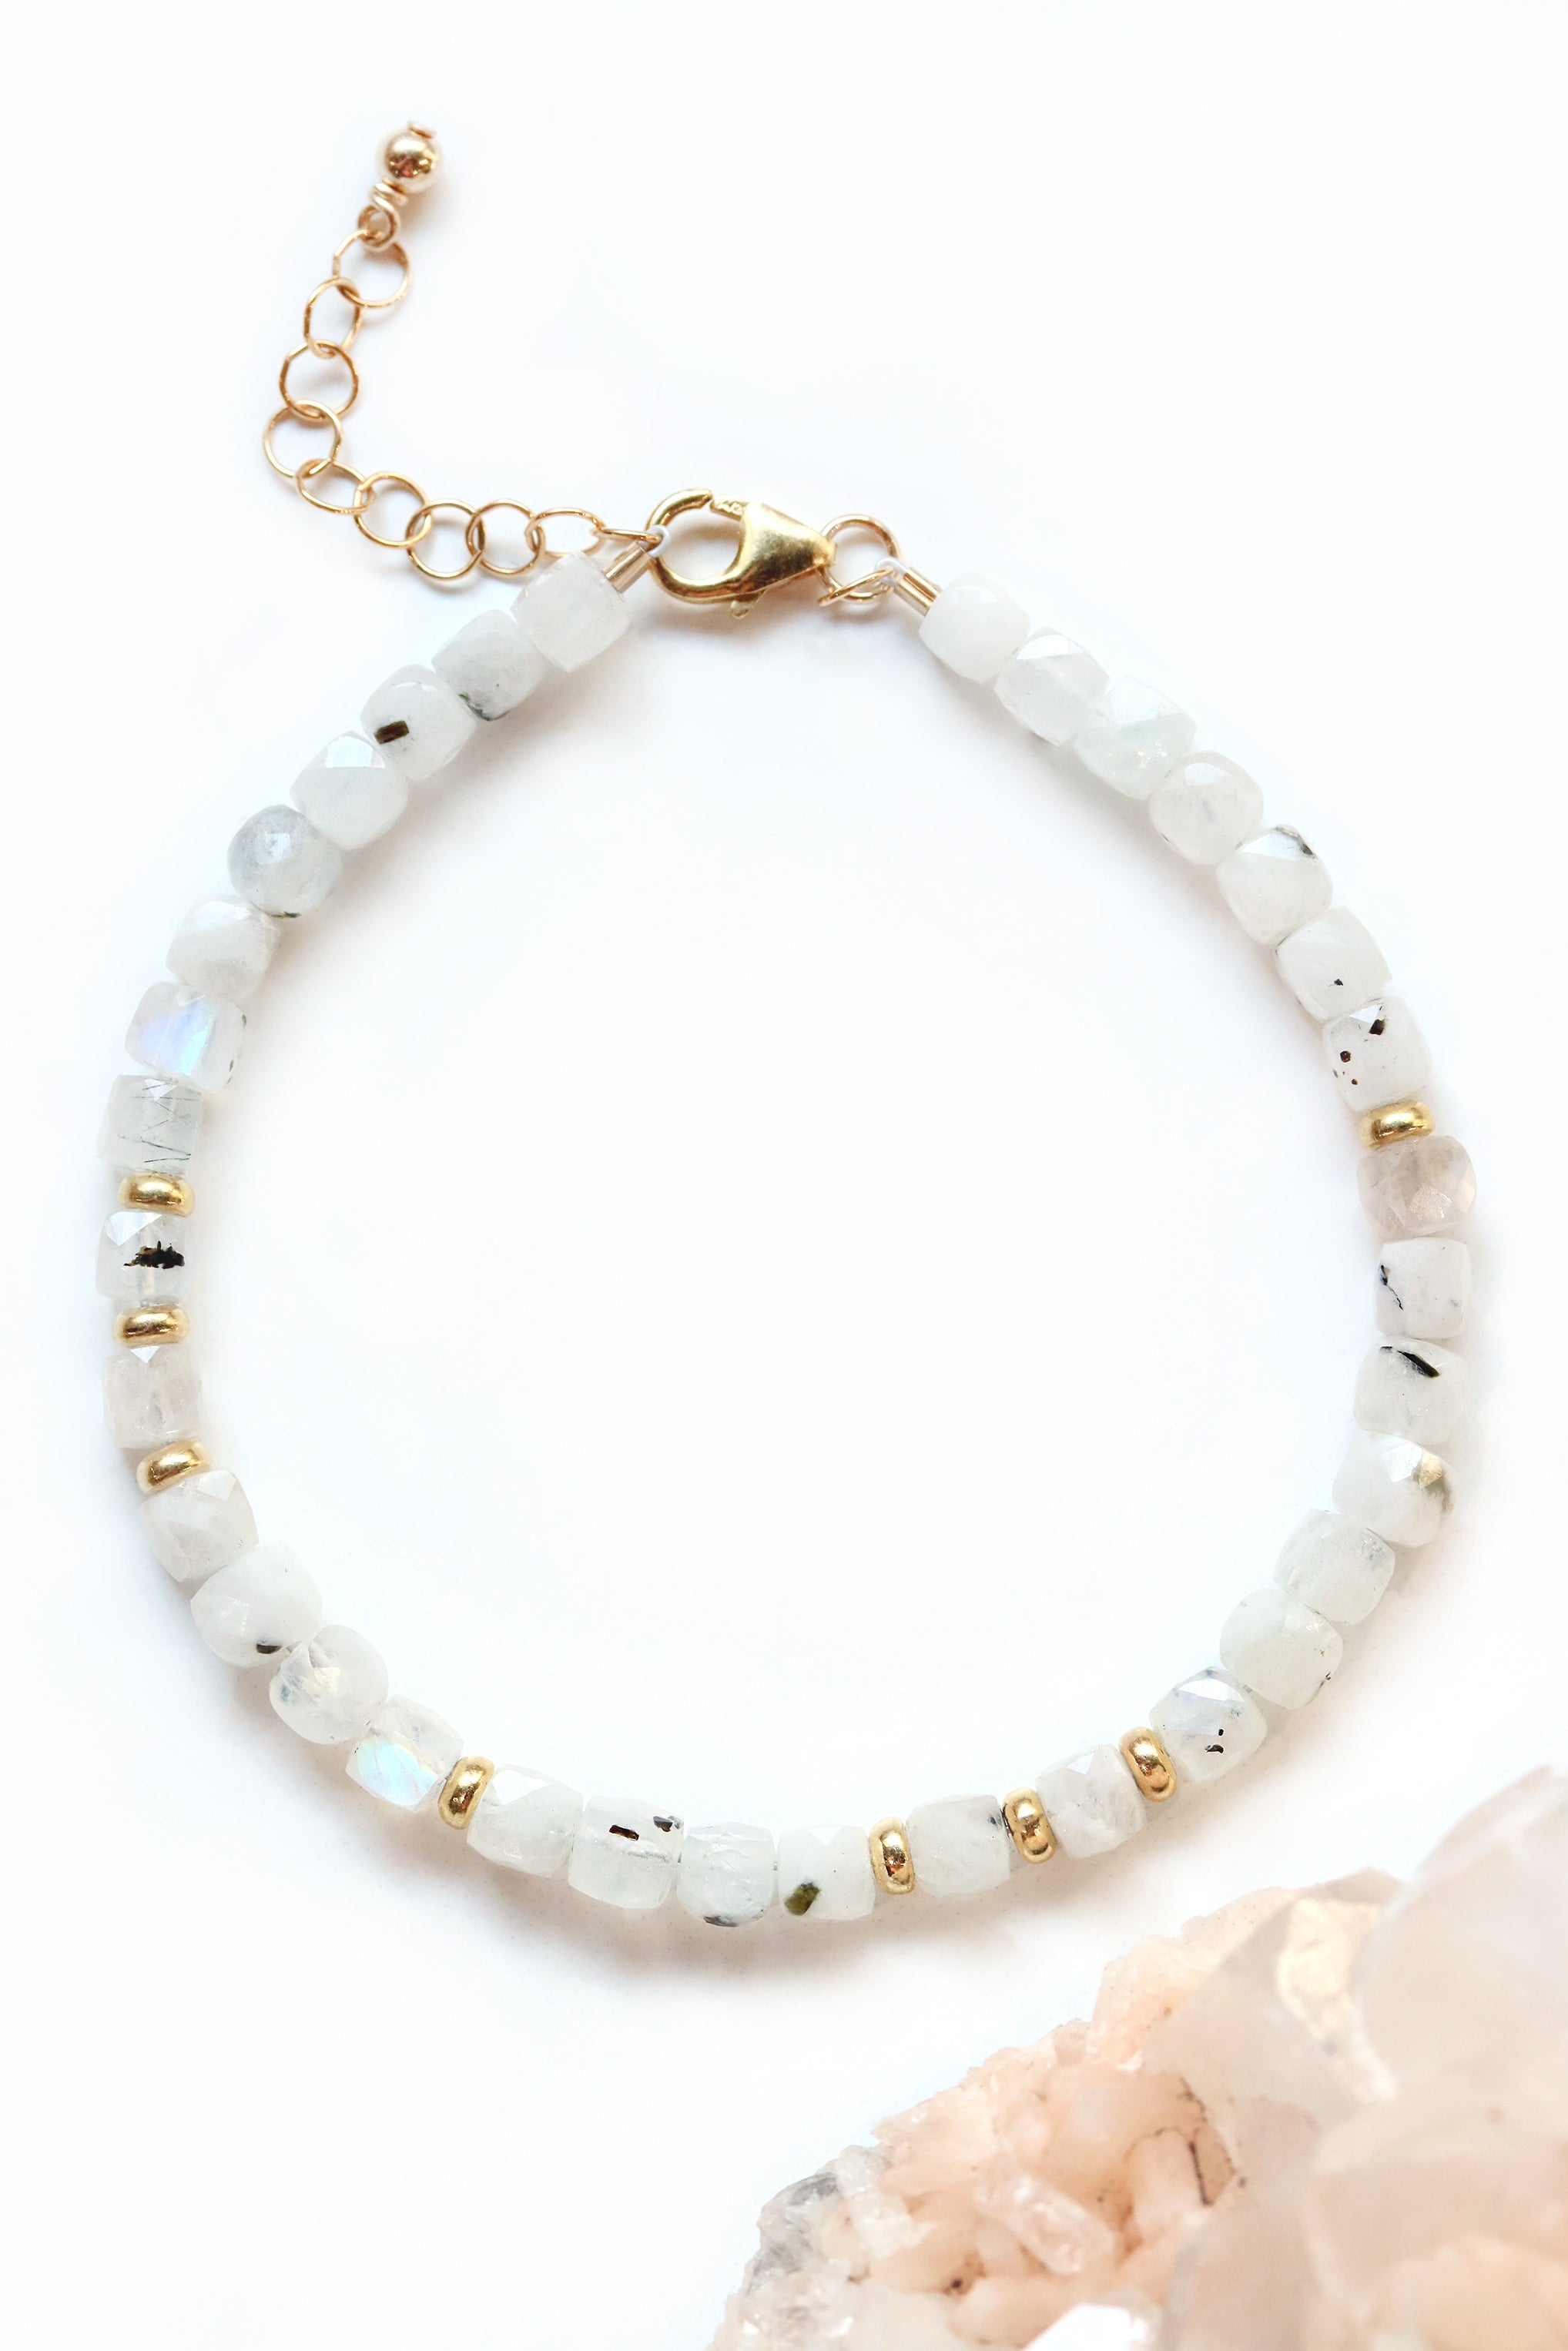 WHITE MOONSTONE Bracelet Stretchy Handmade +Gift Bag & Card Crystal  Gemstone 8mm | eBay